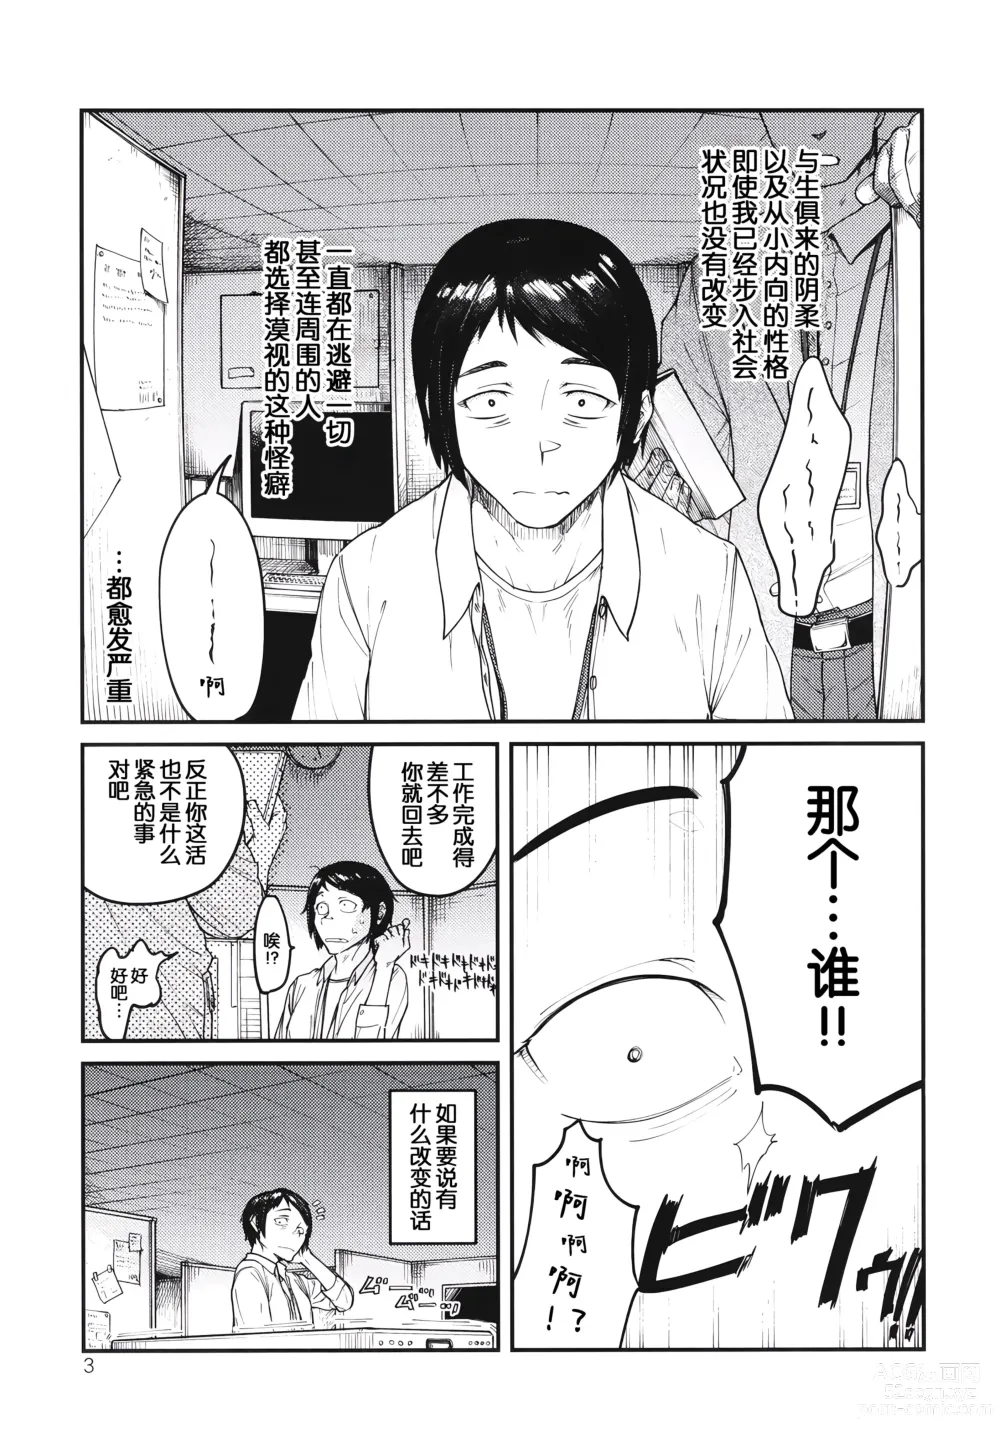 Page 4 of doujinshi MHD-01